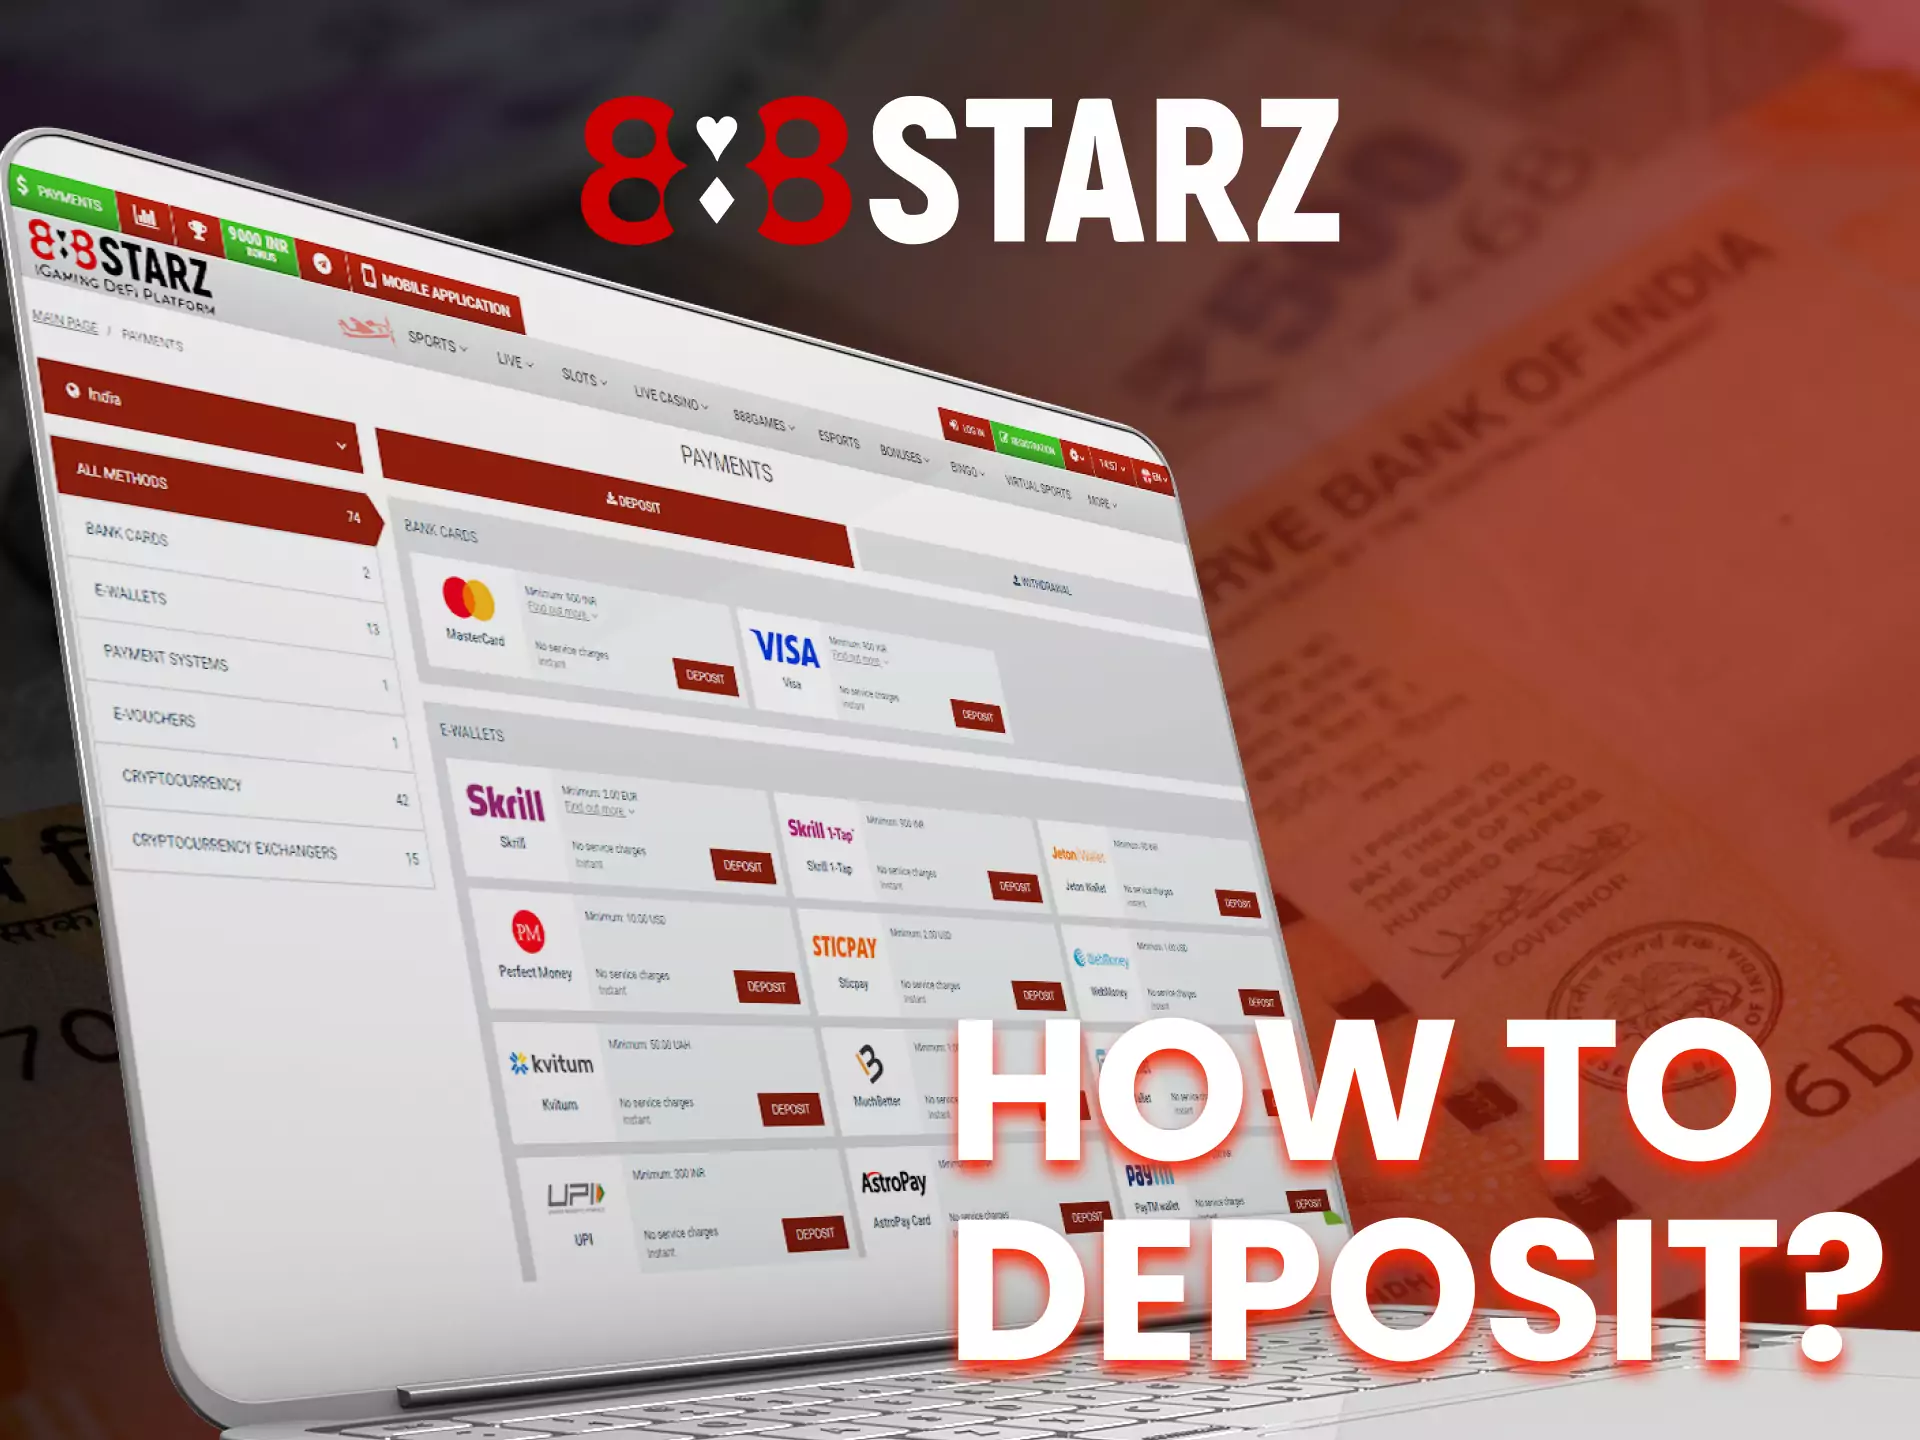 Deposit your money quicker at 888starz.